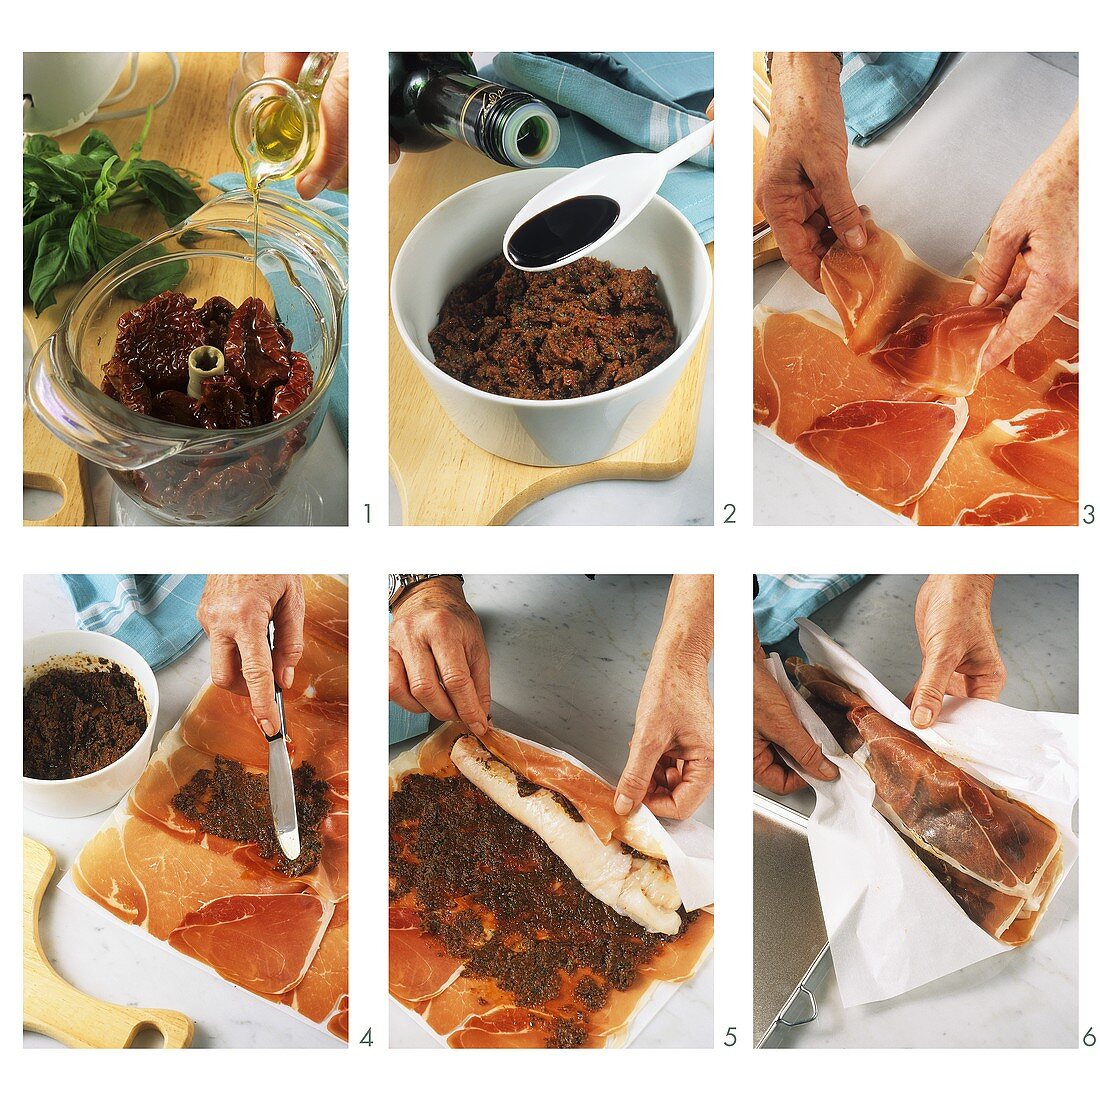 Preparing monkfish Italian style